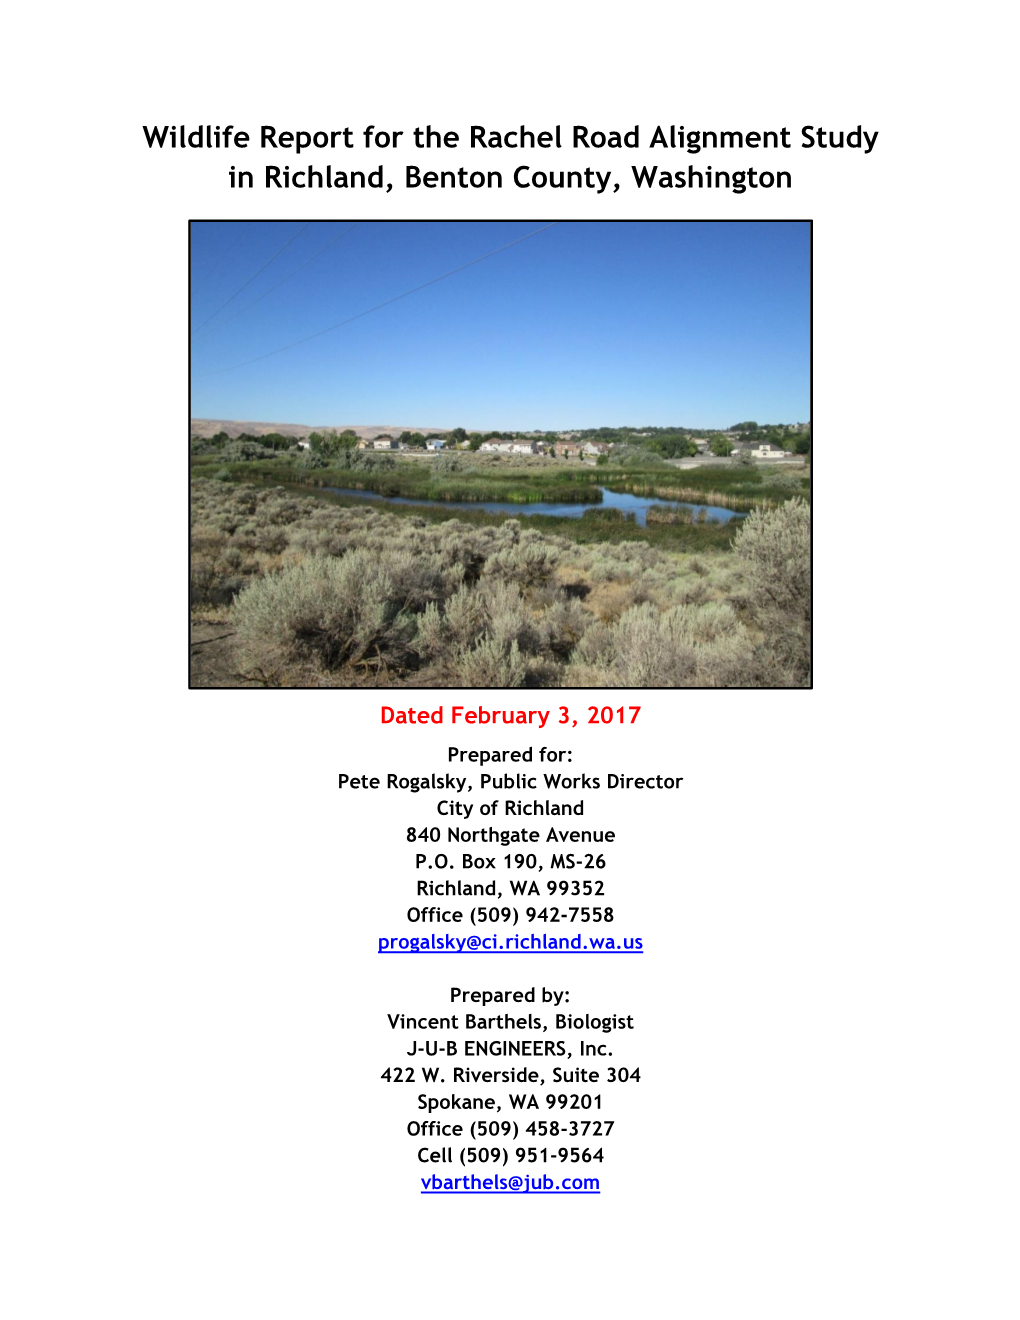 Wildlife Report for the Rachel Road Alignment Study in Richland, Benton County, Washington